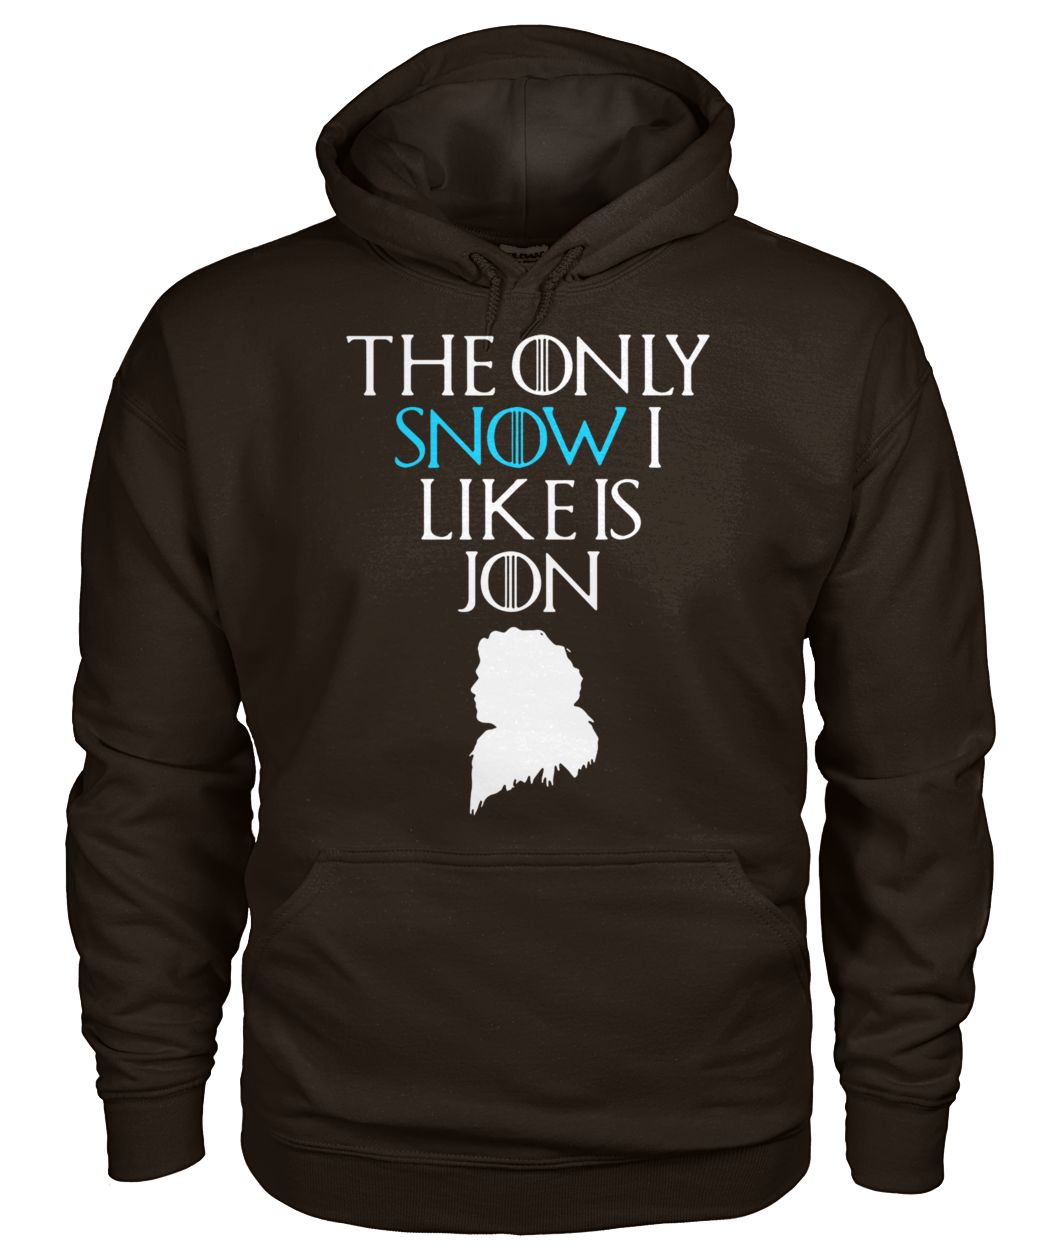 Jon snow the only snow I like is jon game of thrones gildan hoodie